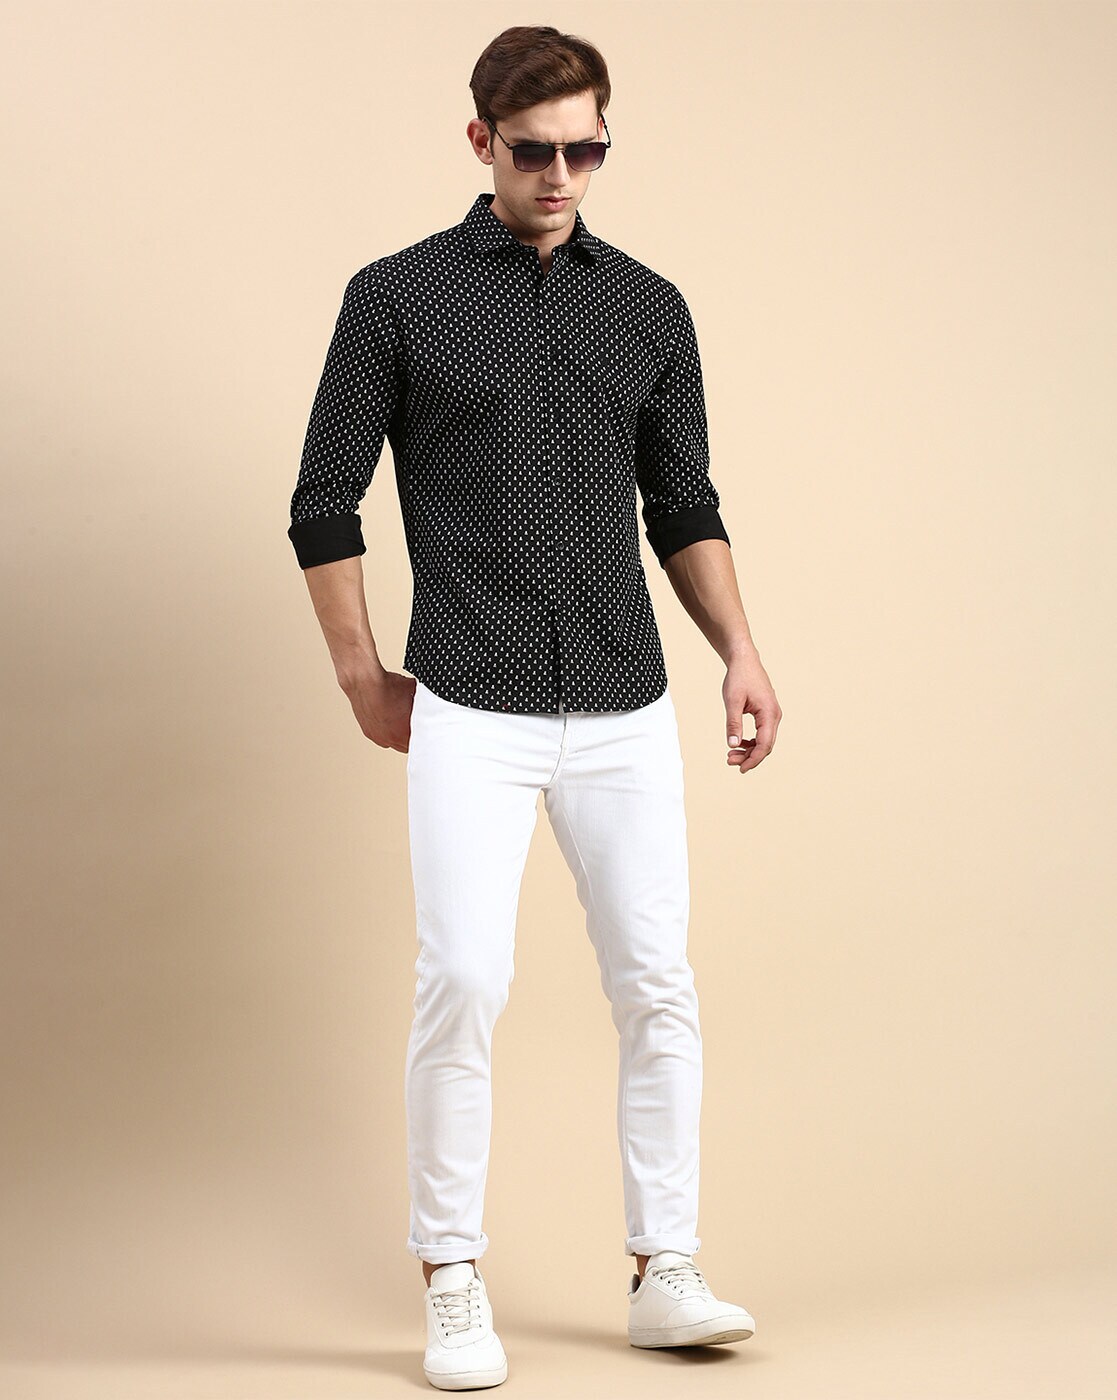 POLKA DOT SHIRT ECRU / BLACK - 7969/228 Collared shirt with long